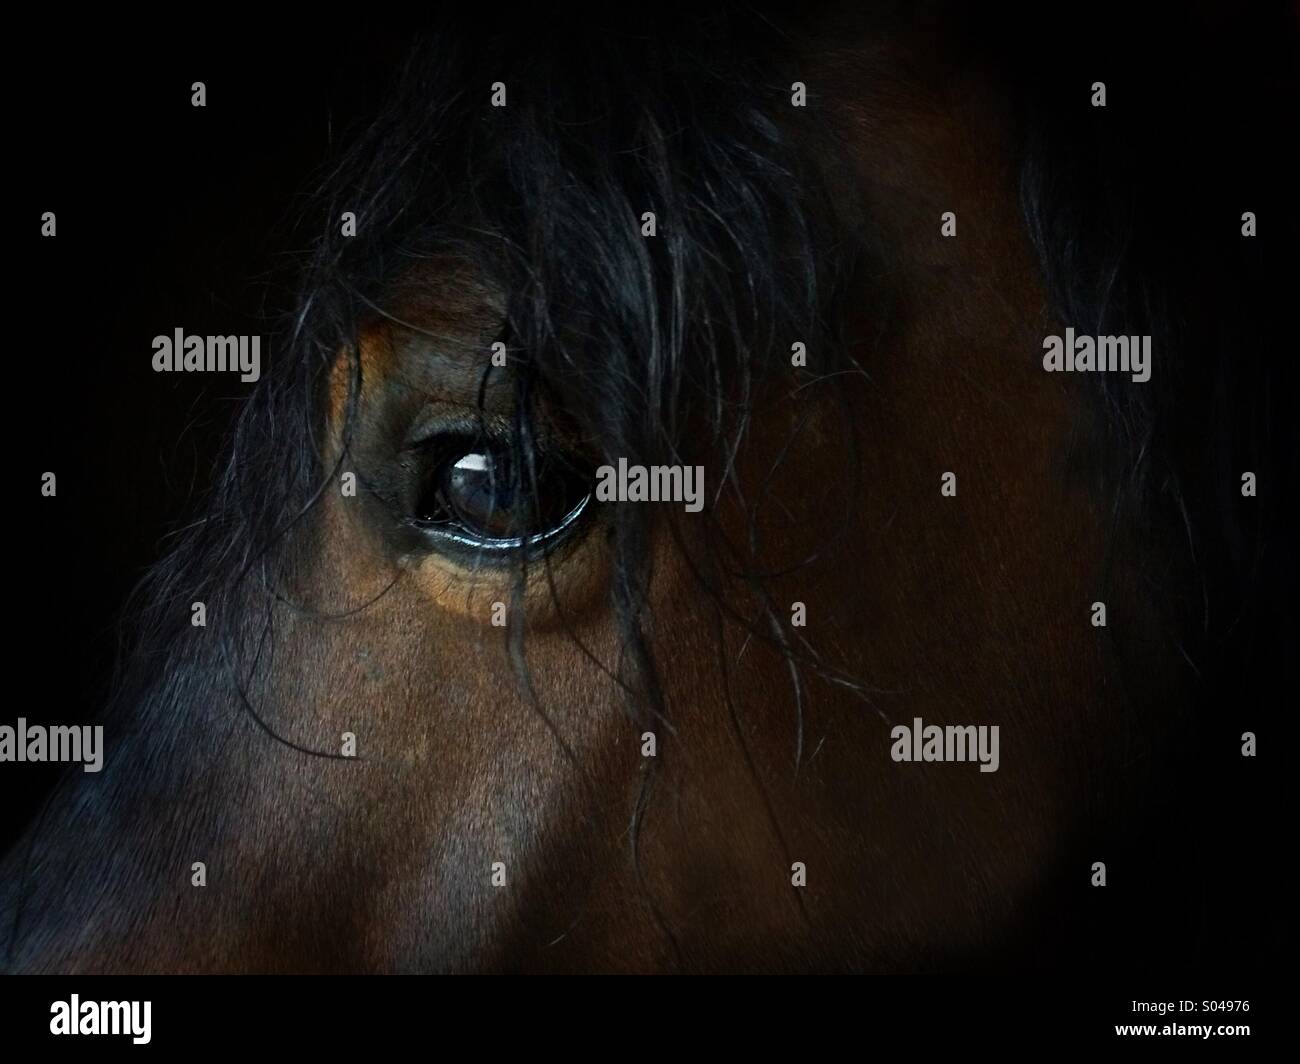 Intelligent eye of a horse Stock Photo